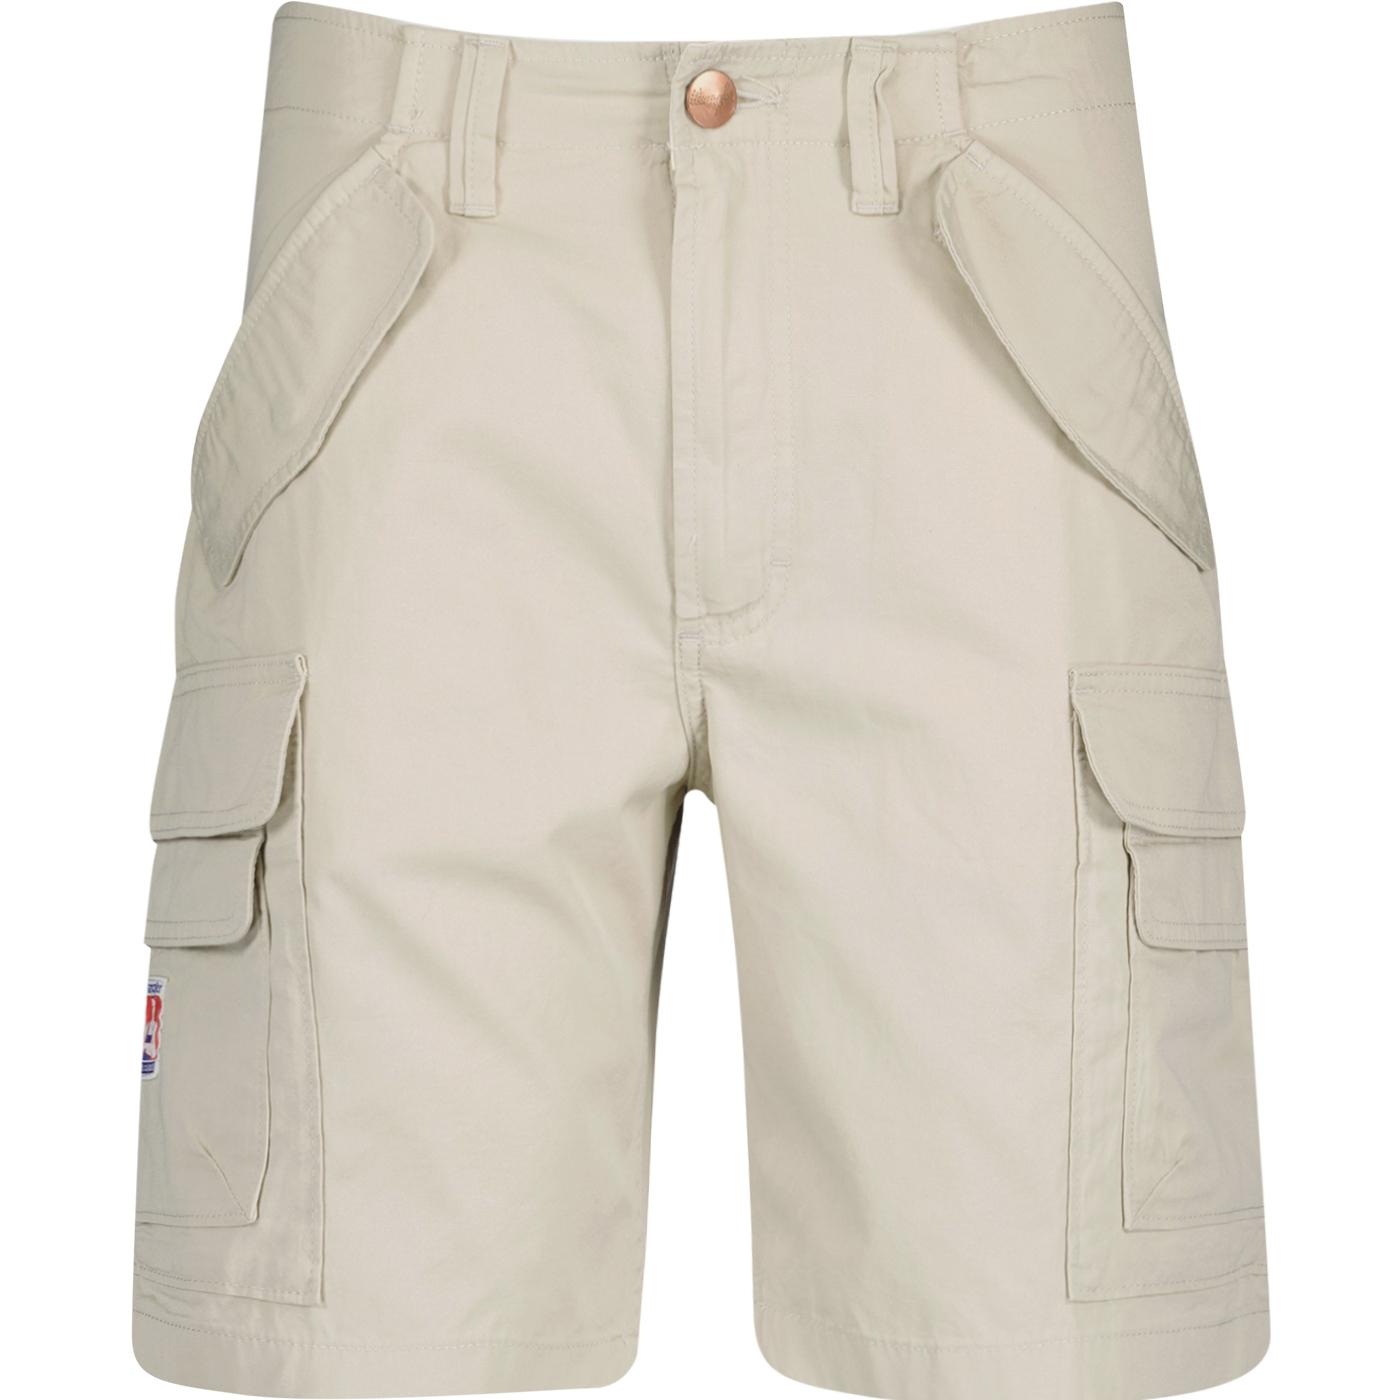 Casey Jones Wrangler Retro Cargo Shorts (Beige)